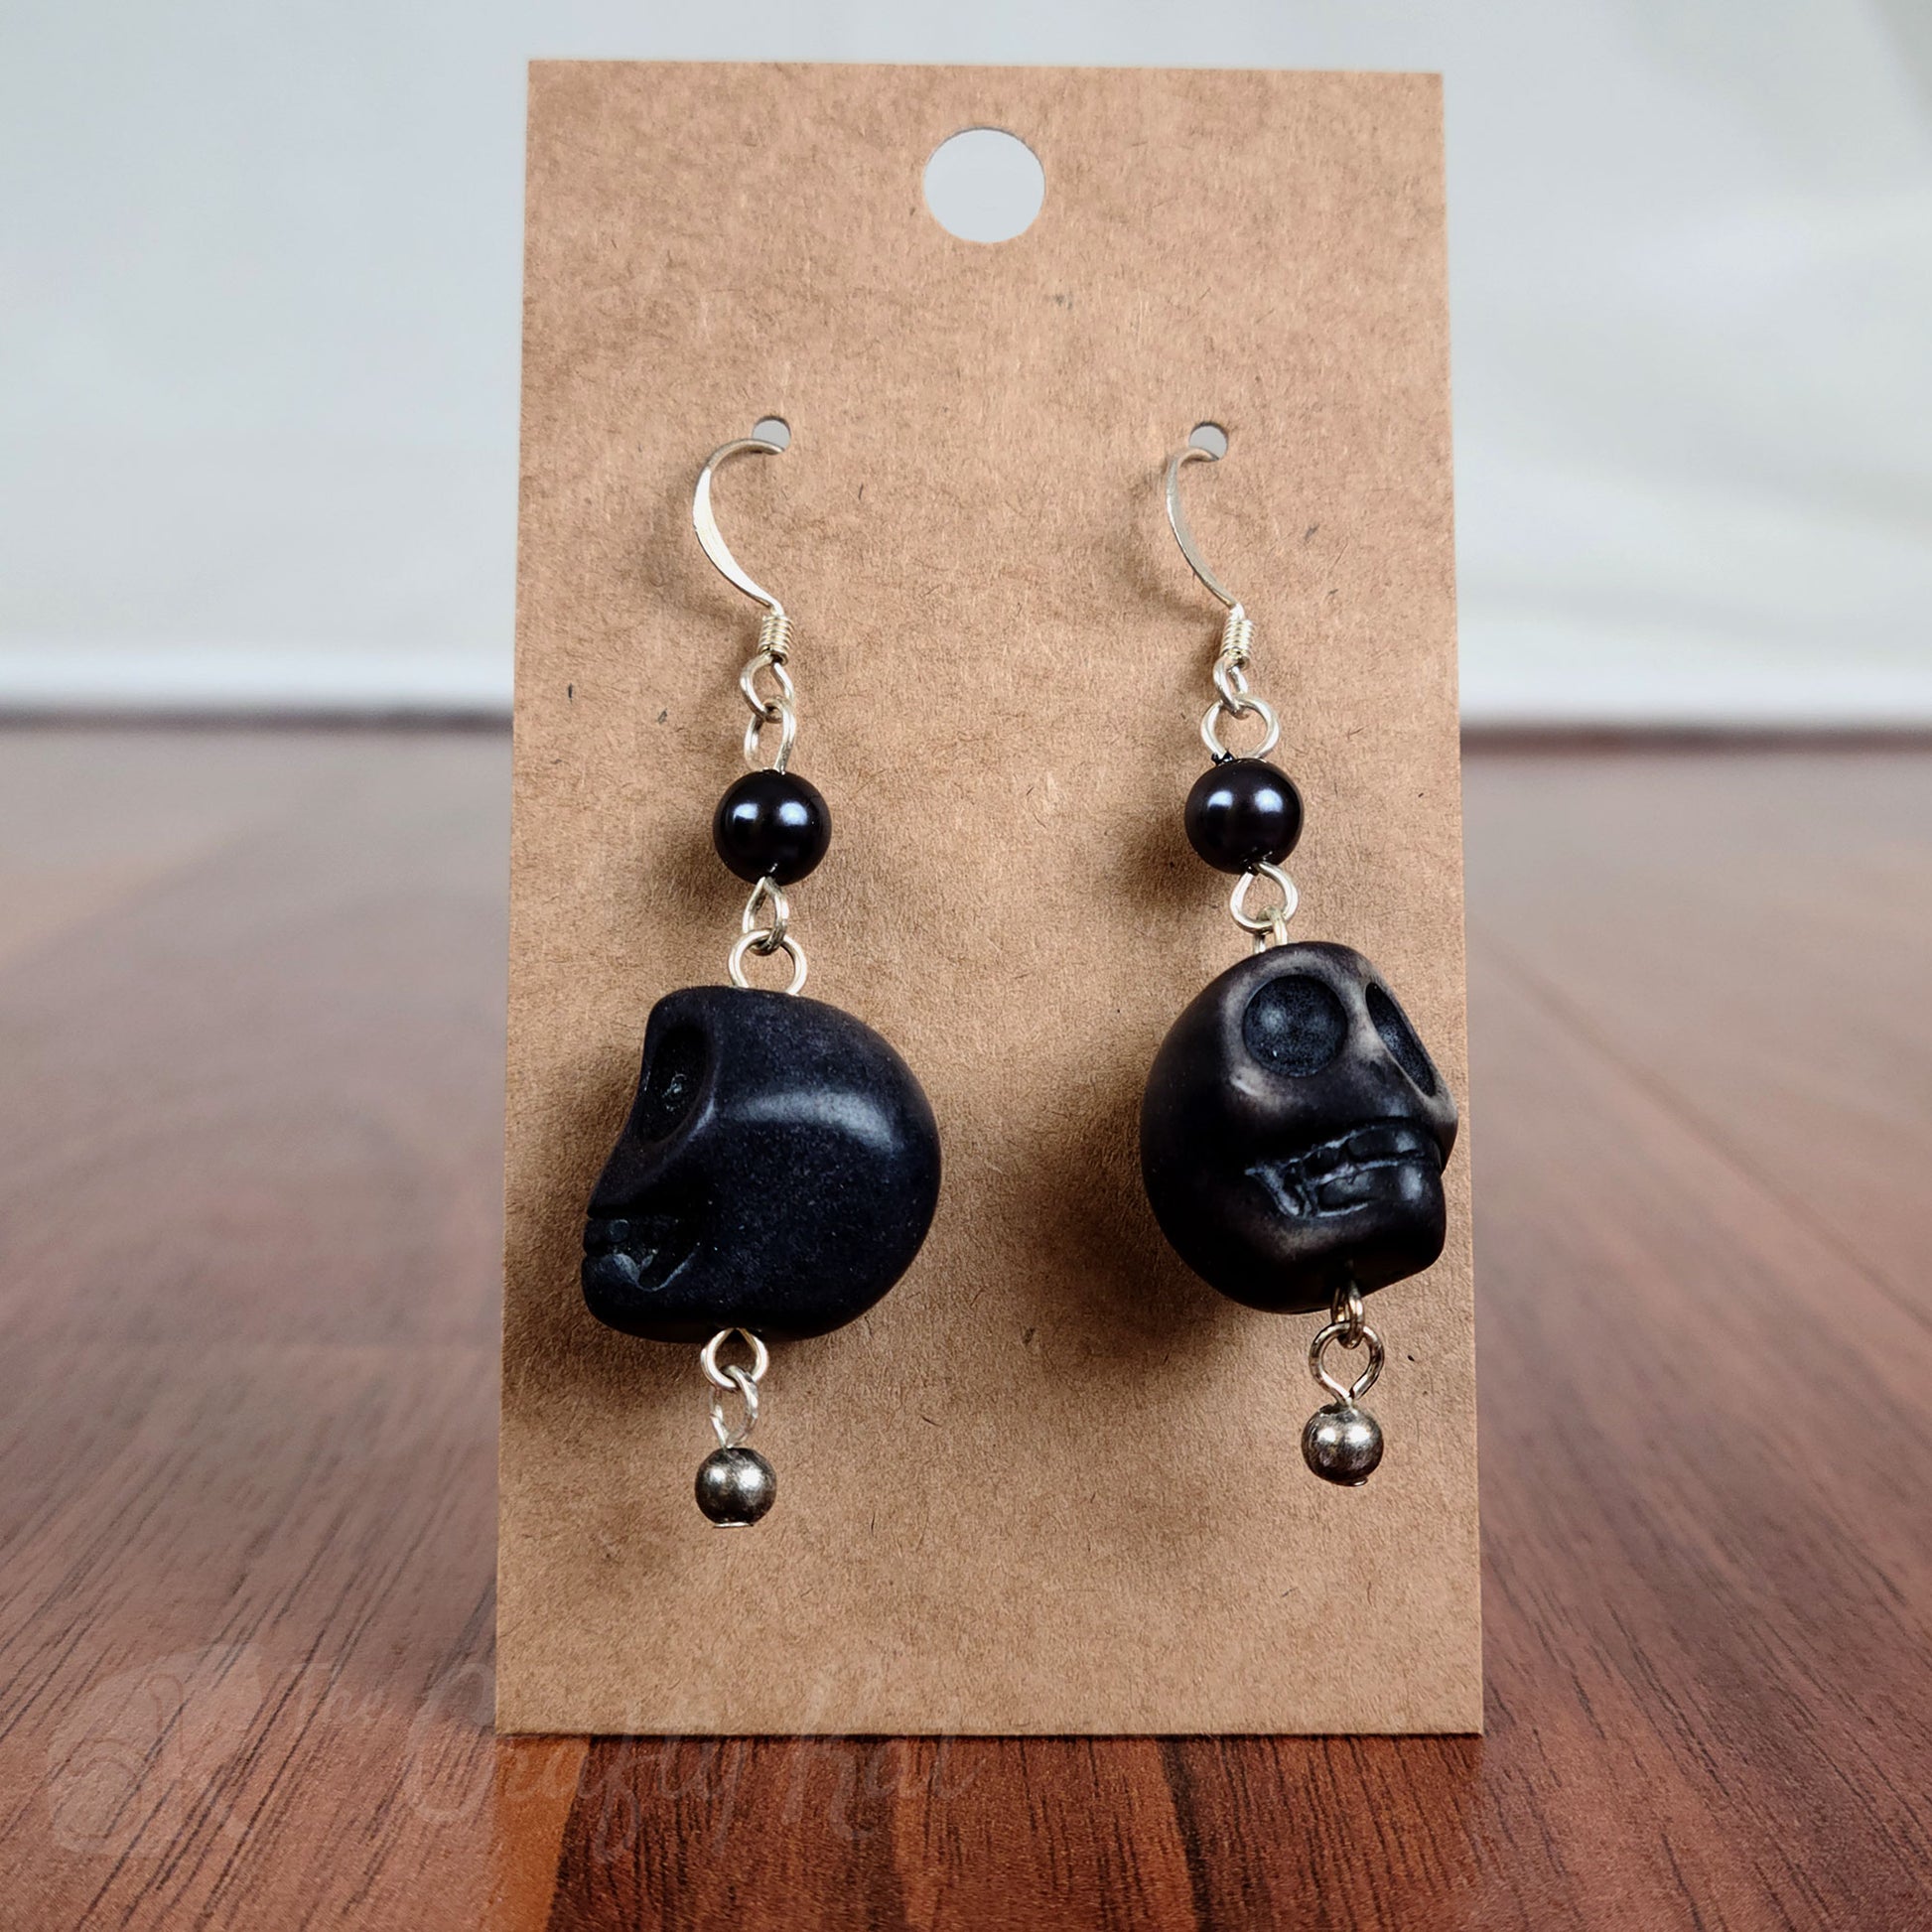 Black stone skull earrings with silver hardware